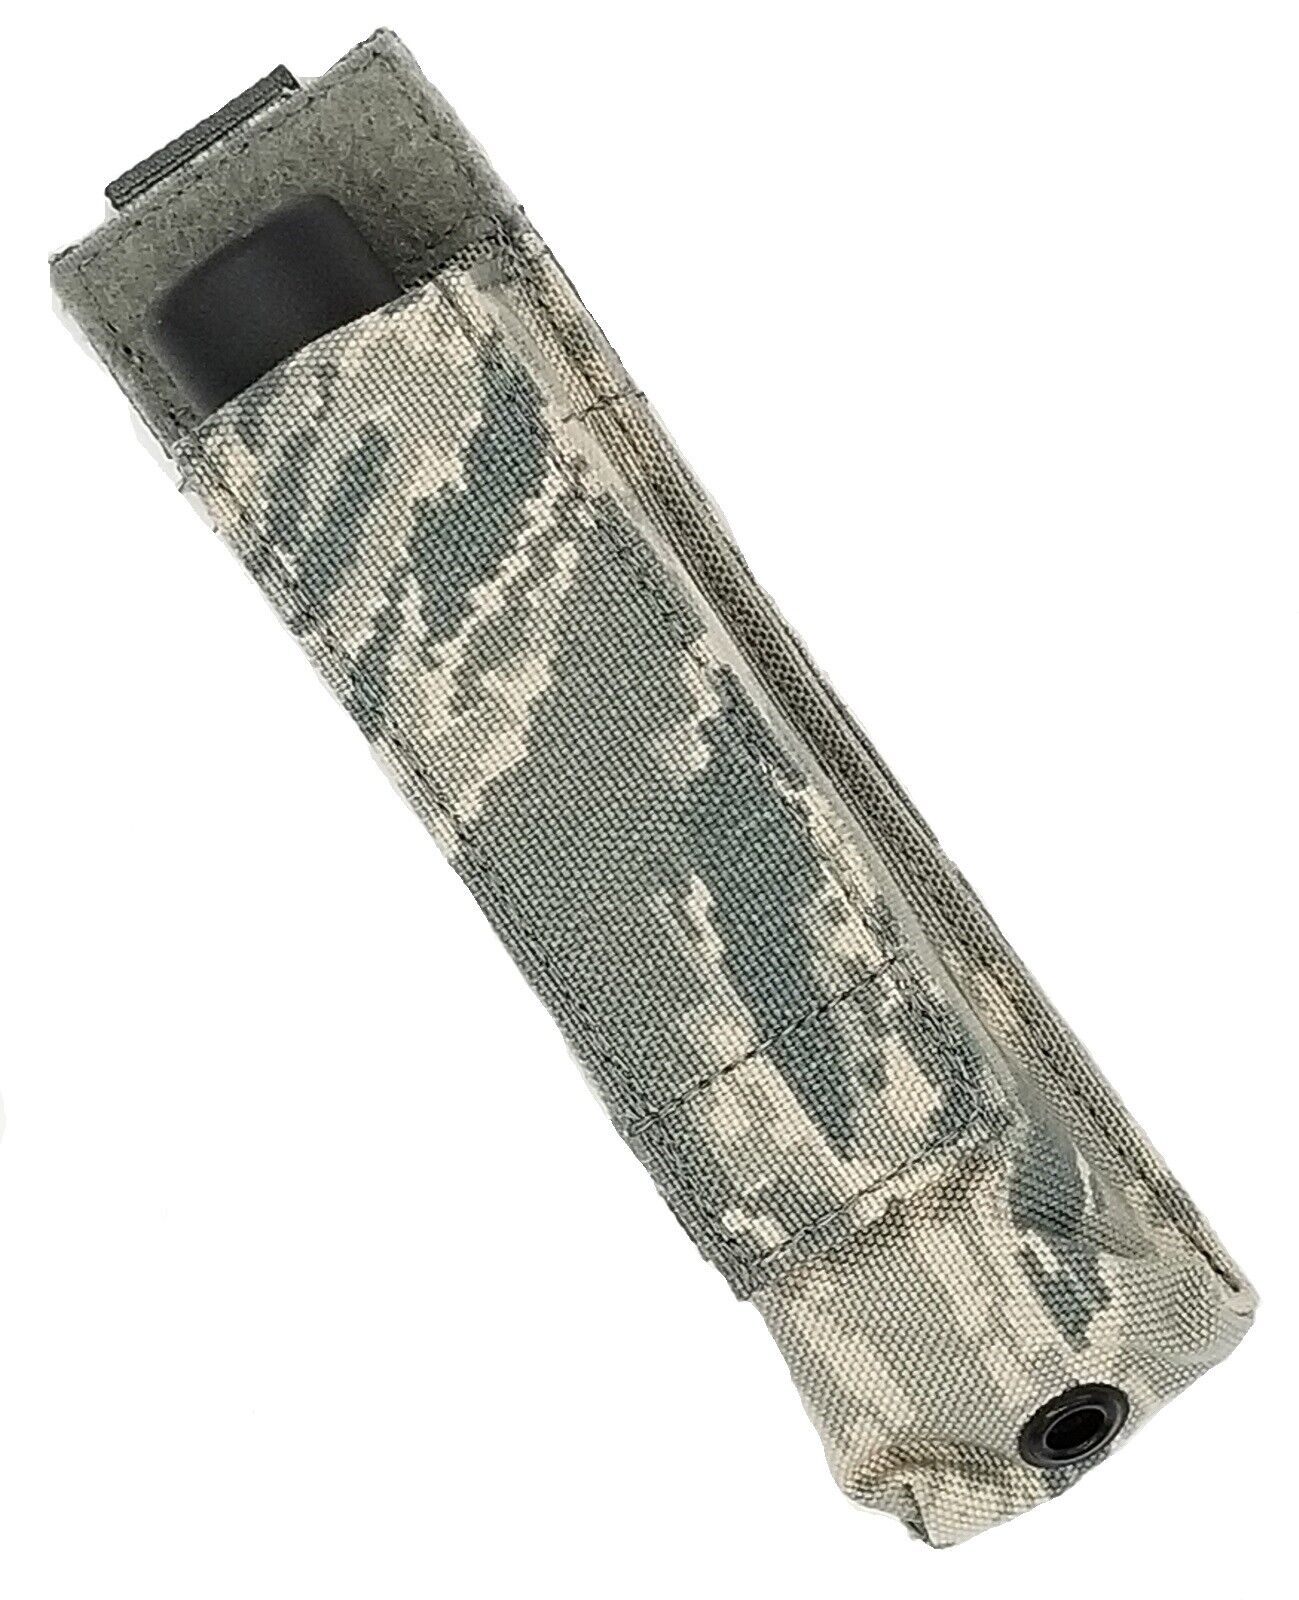 USAF ABU DFLCS Expandable Baton Pouch MOLLE DF-LCS Flashlight Suppressor